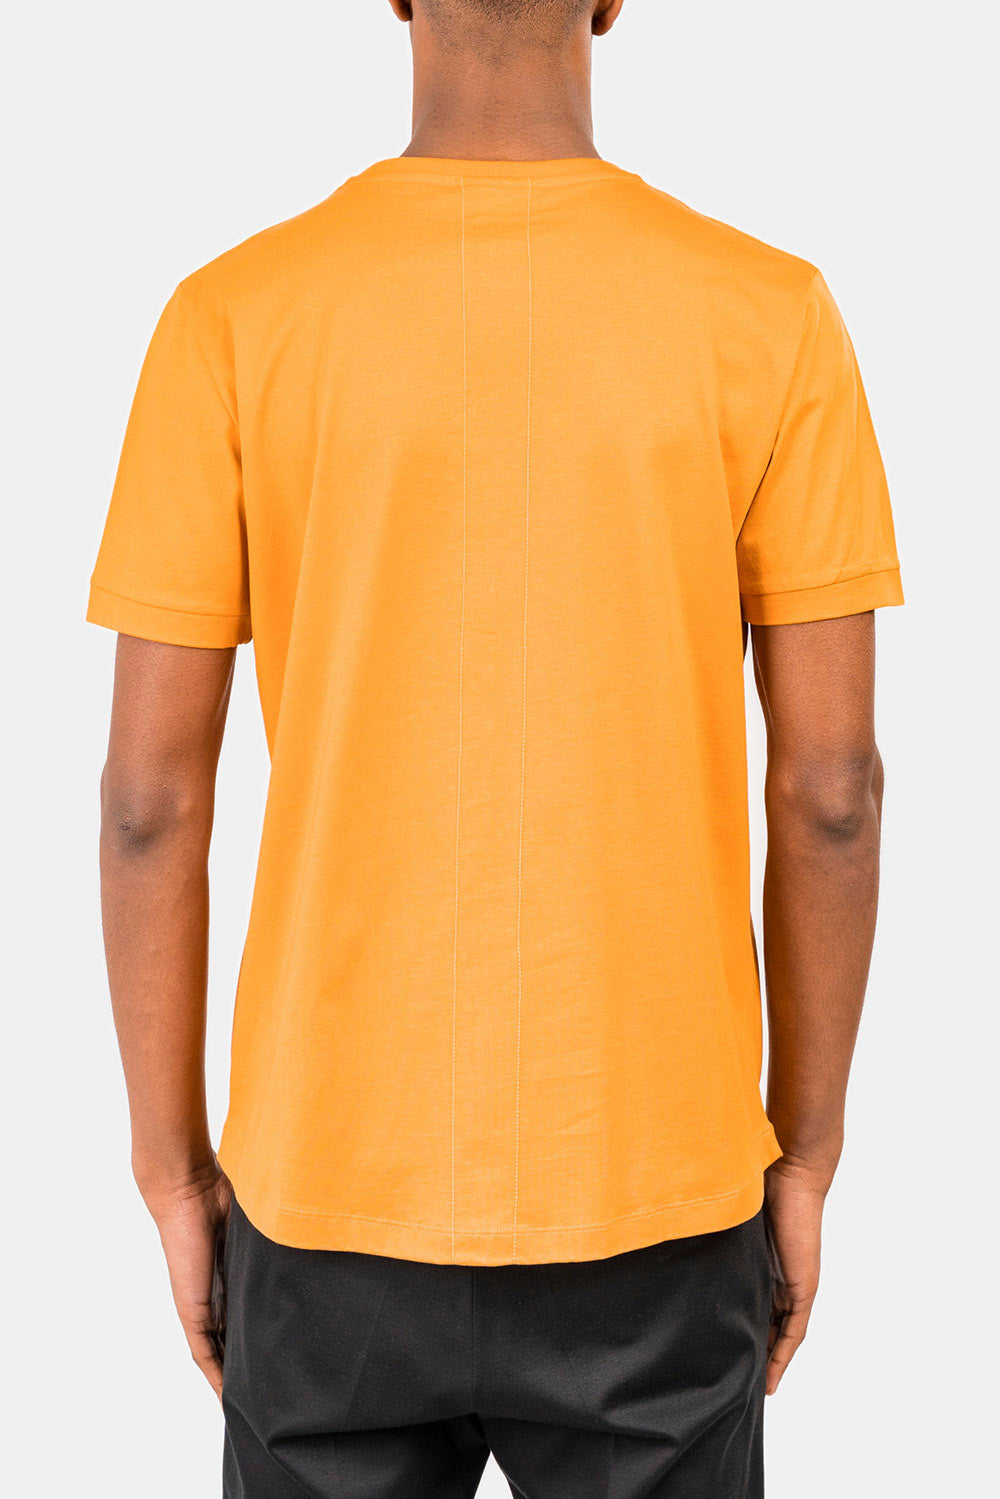 INIMIGO Classic Heart Orange Regular Fit T-Shirt Menswear